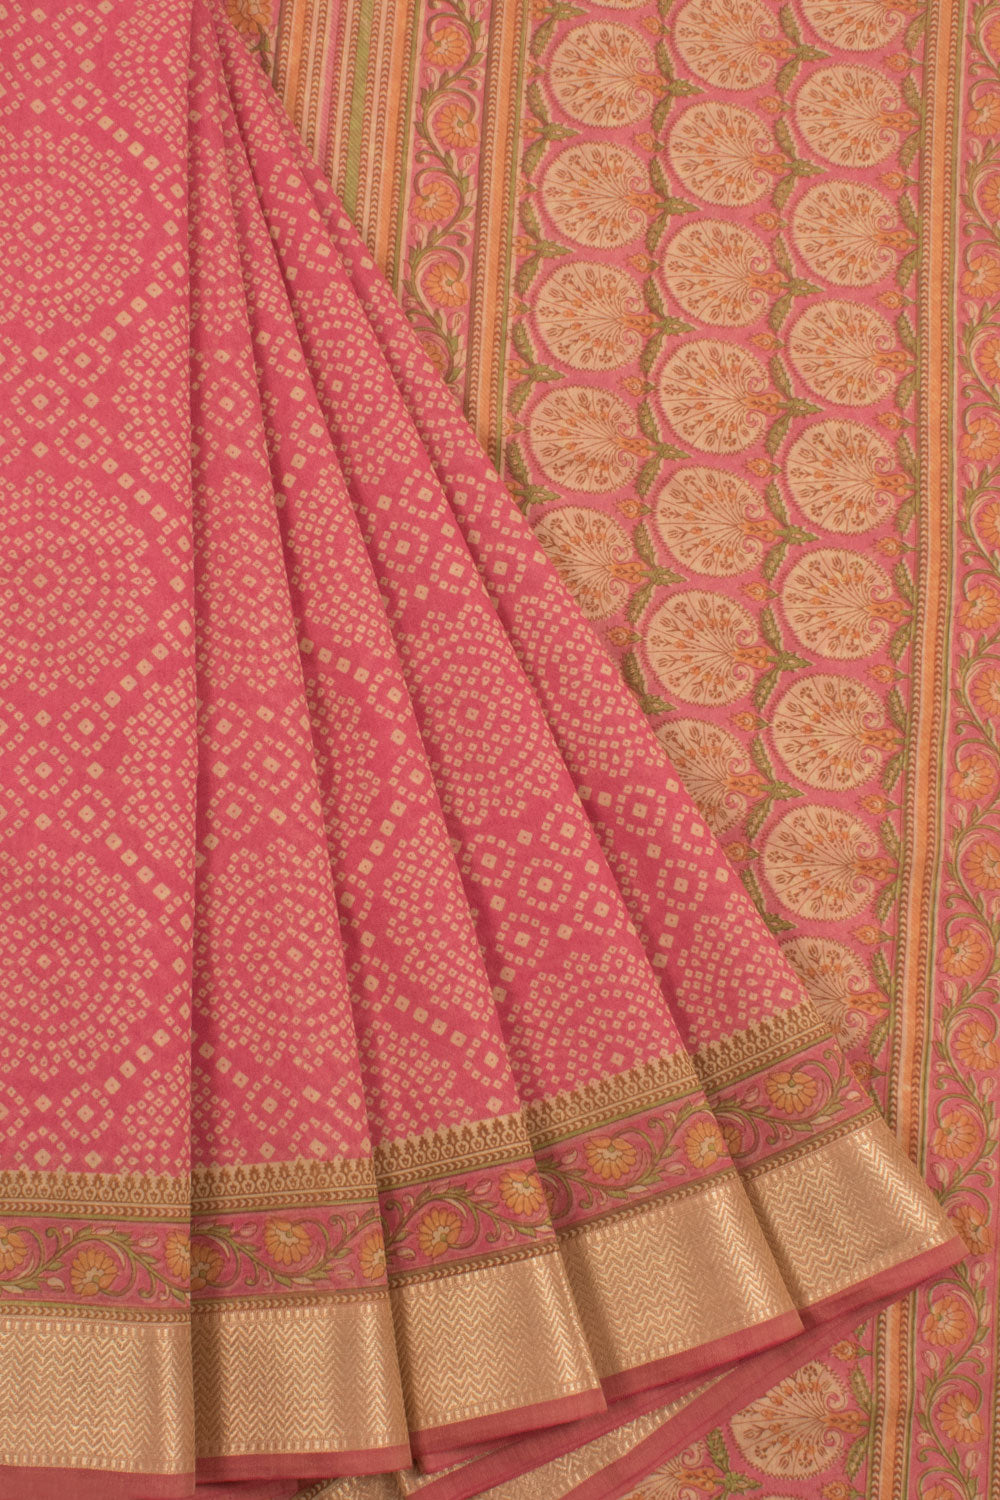 Hand Block Printed Silk Cotton Saree with Floral Motifs and Zari Border